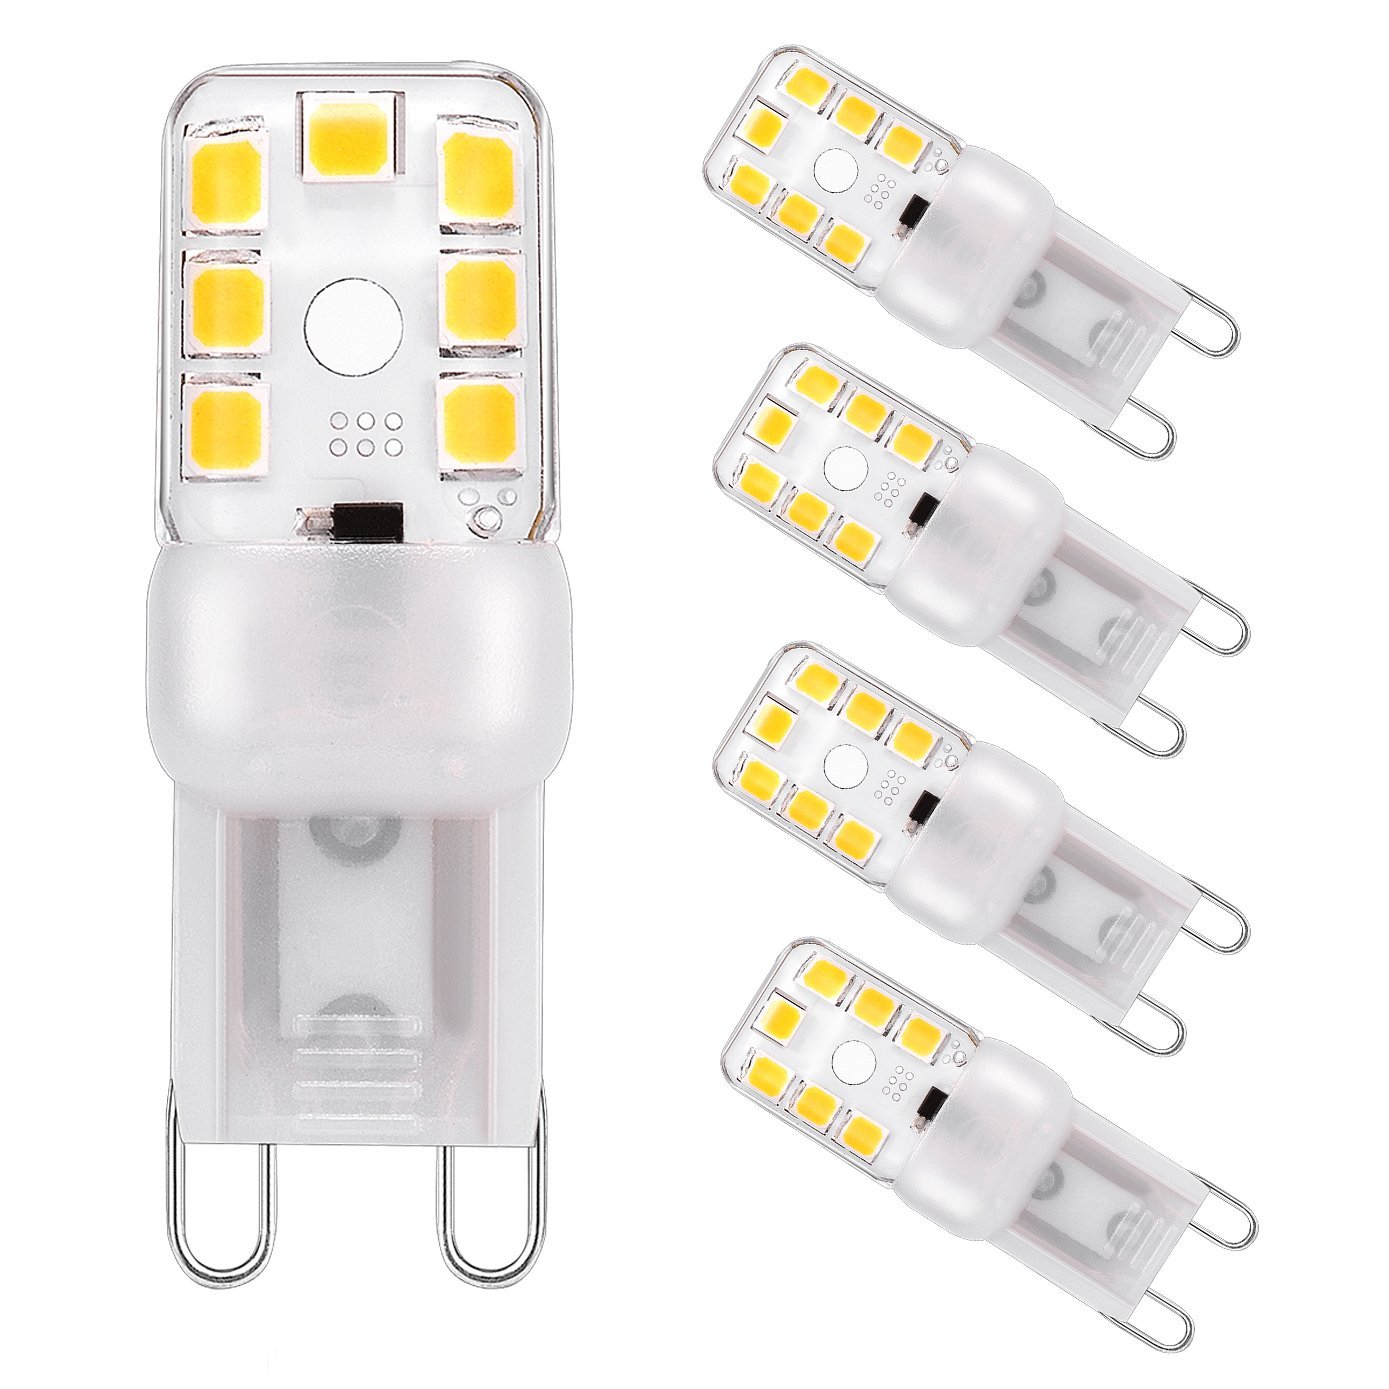 Bulb Dimmable 3W - 30W Halogen Equivalent ,Warm White G9 Chandeliers Bathroom Ceiling Lights Energy Saving Bulbs AC120V （pack 5） - I-SHUNFA